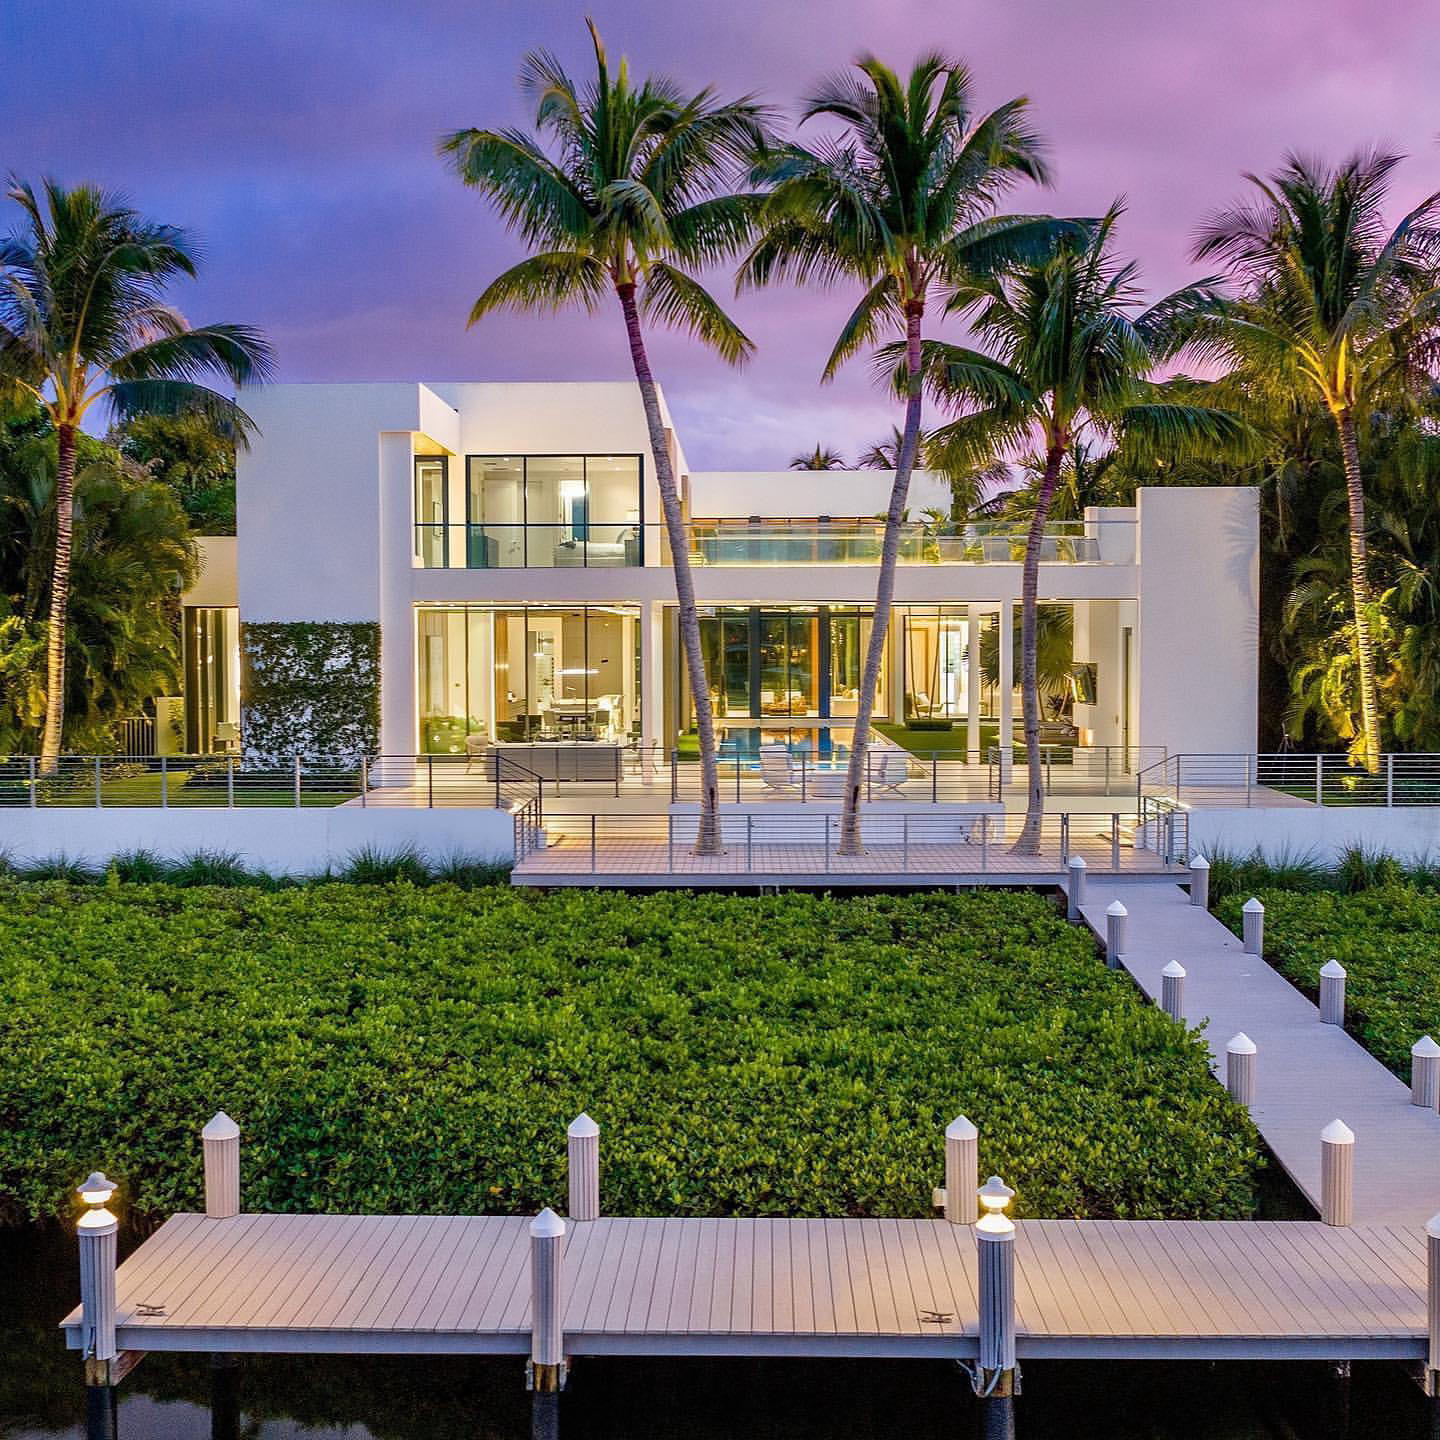 $18,500,000 in Jupiter, Florida gets you this stunning waterfront estate